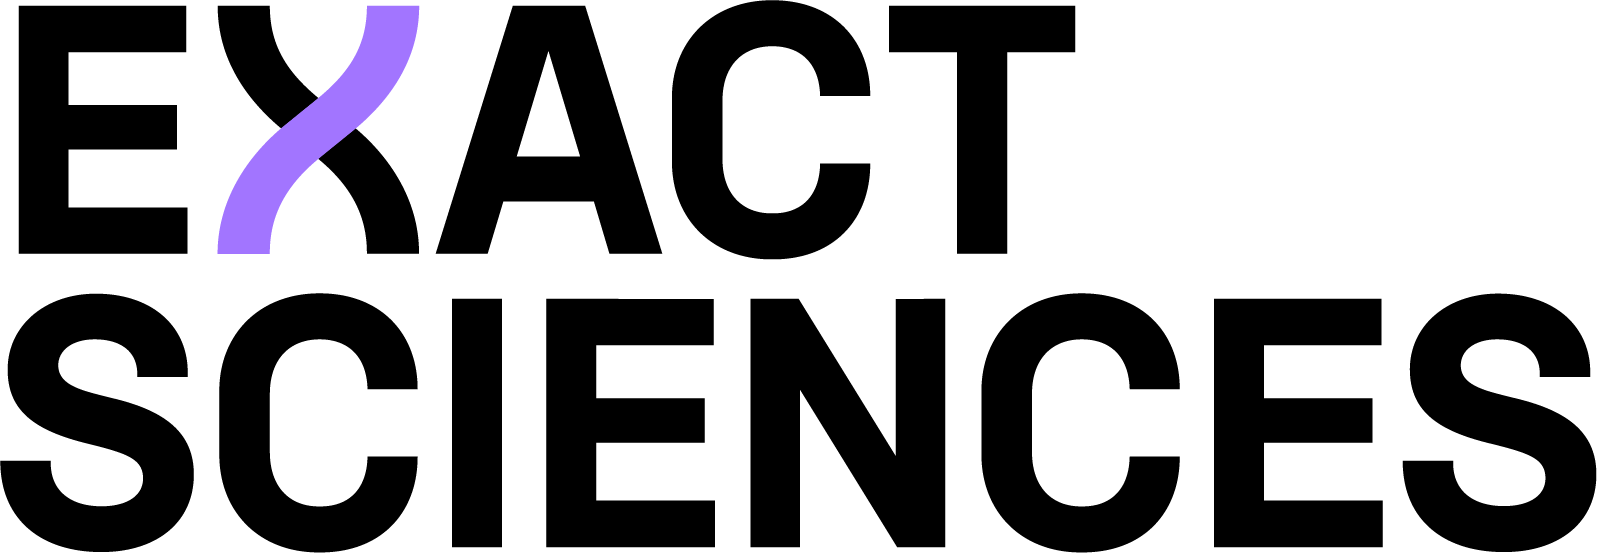 Exact Sciences Logo png